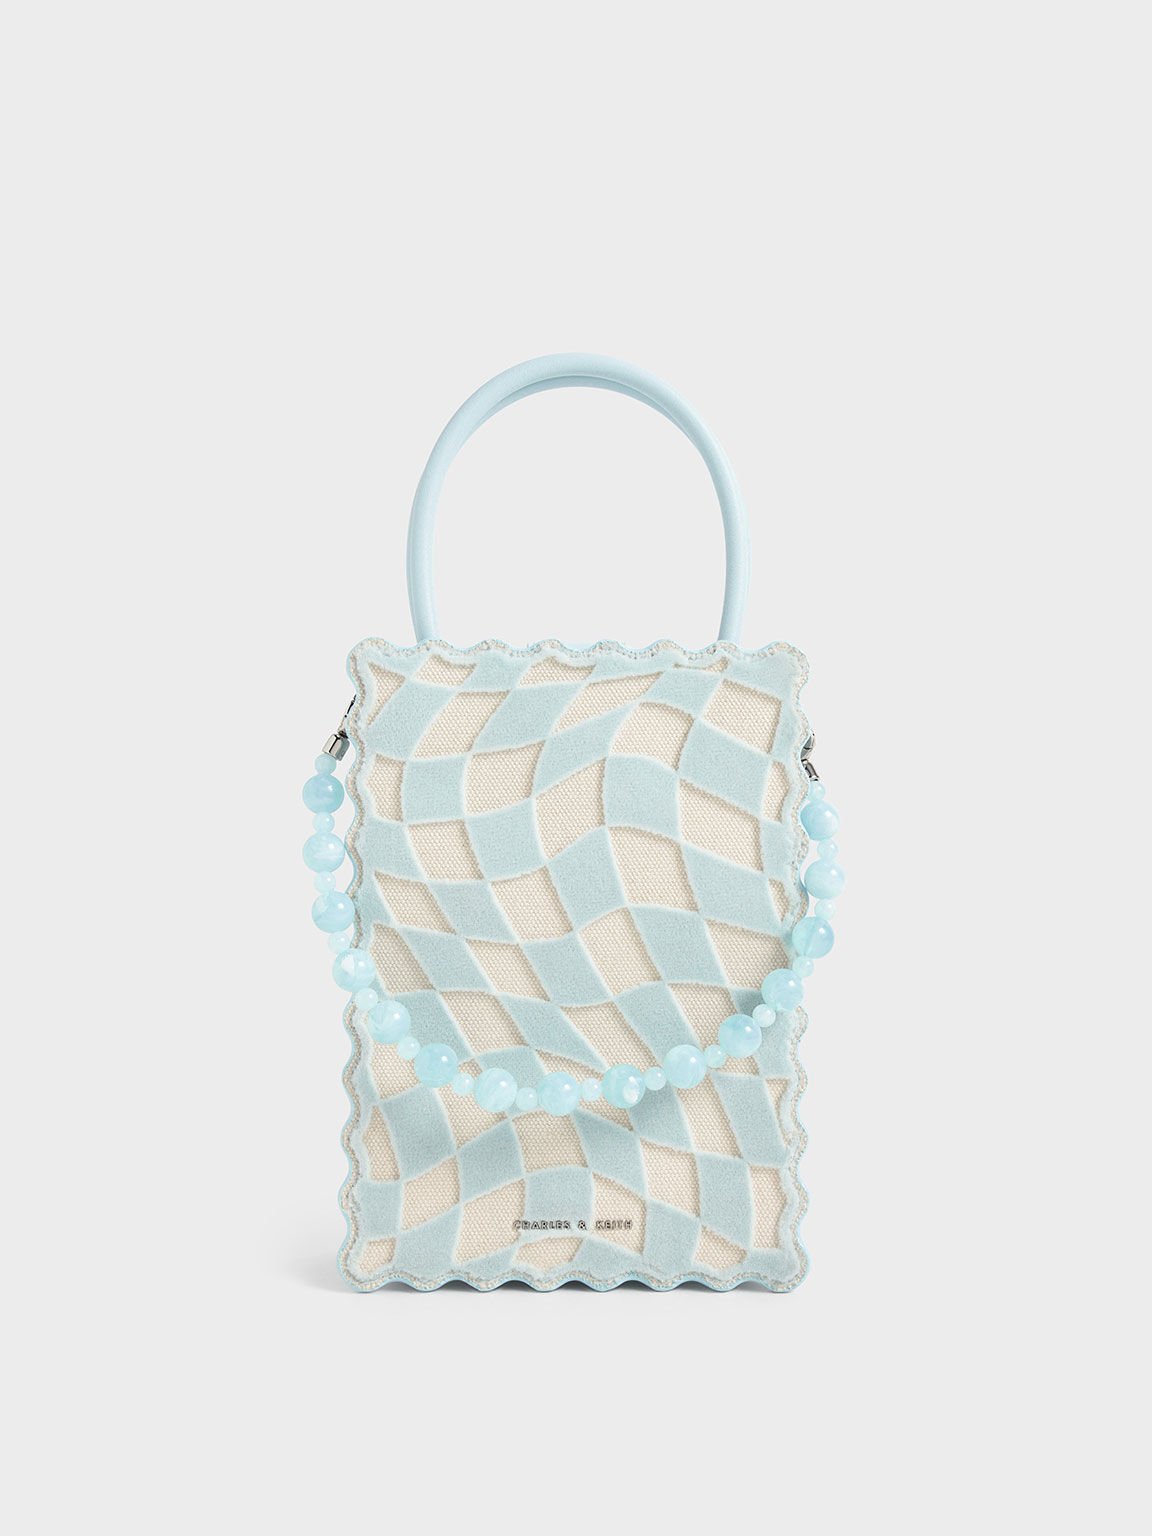 Rowan Beaded Checkered Tote Bag, Light Blue, hi-res